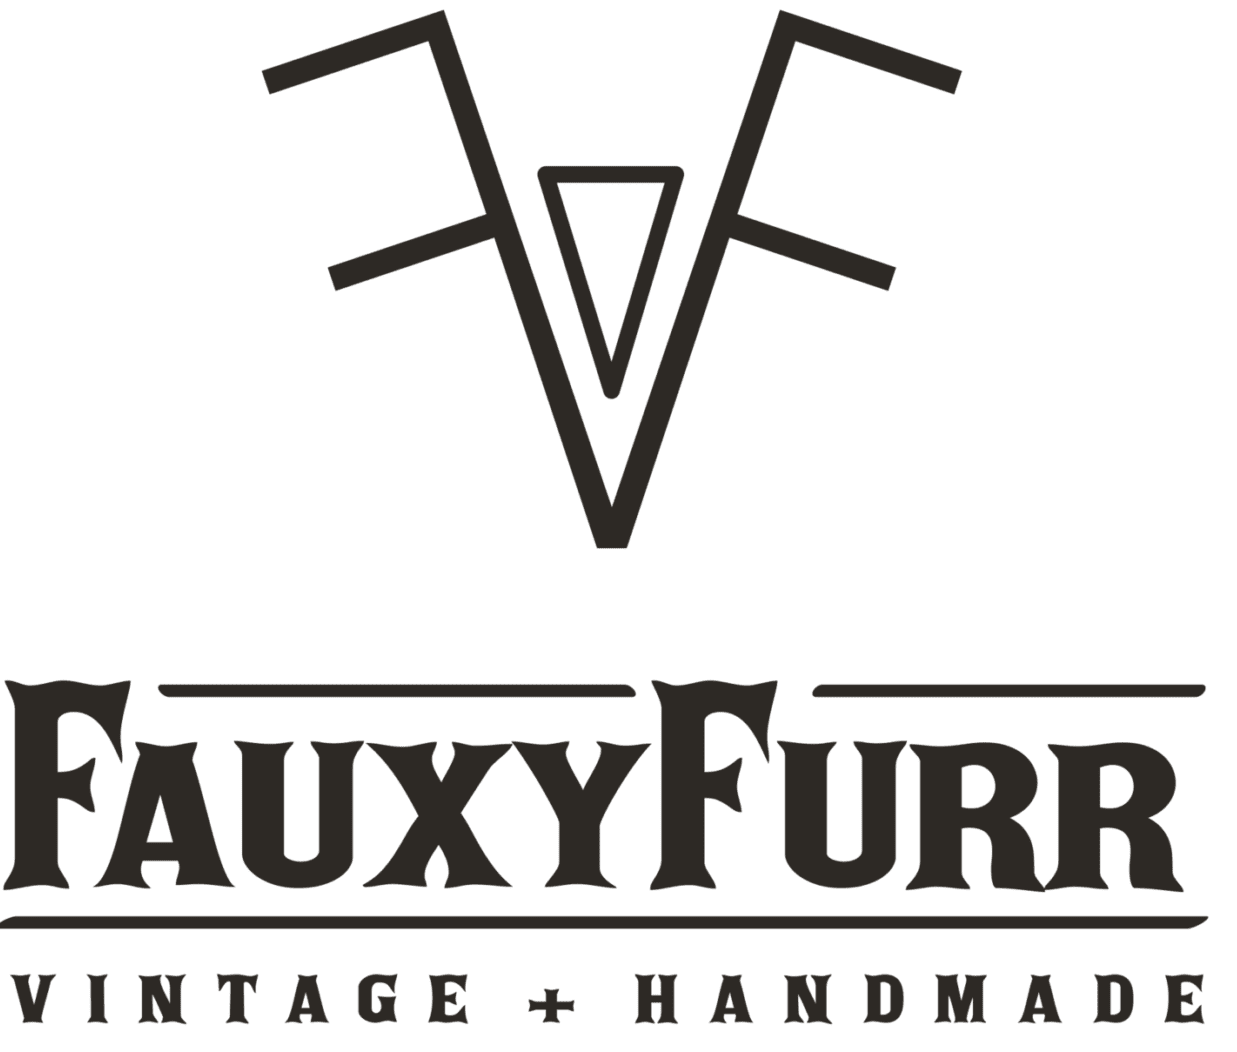 Fauxy Furr Vintage & Handmade